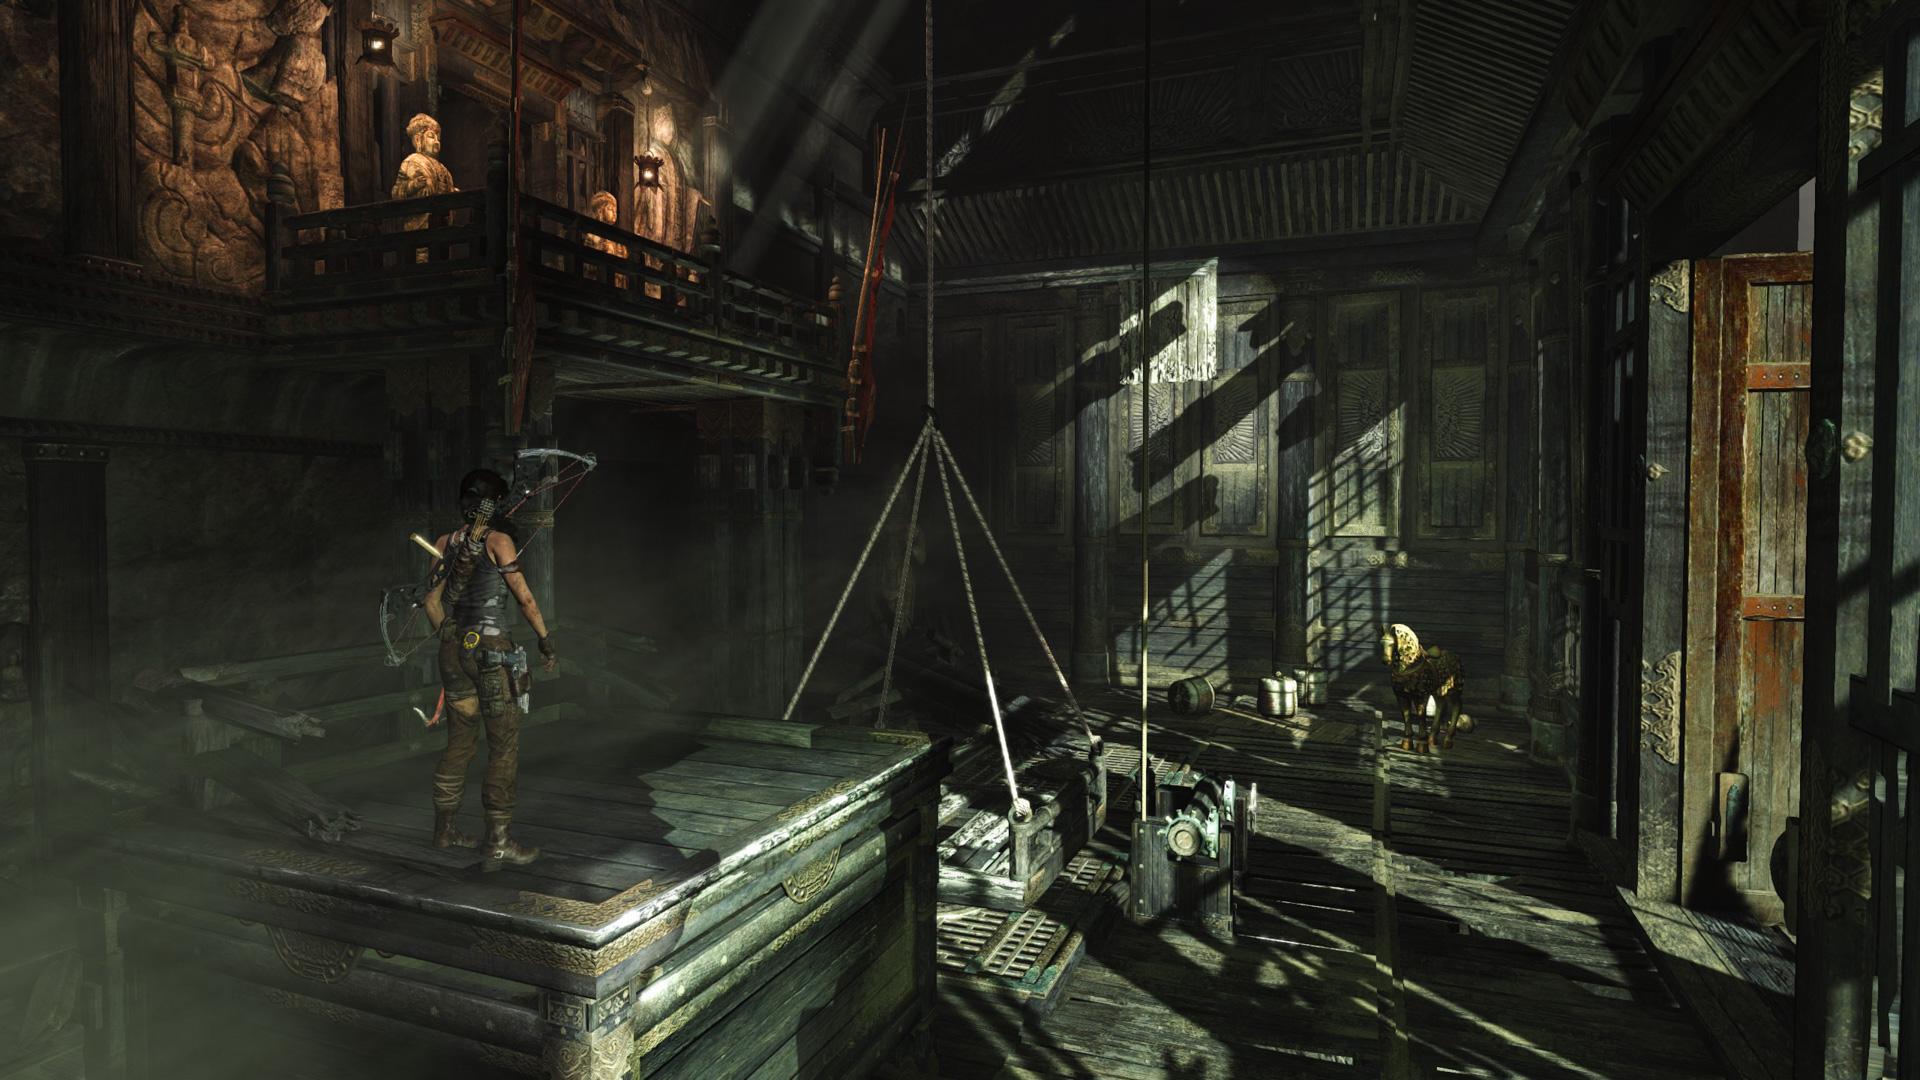 Lara Croft in Tomb Raider 2013's Hall of Ascension Challenge Tomb.